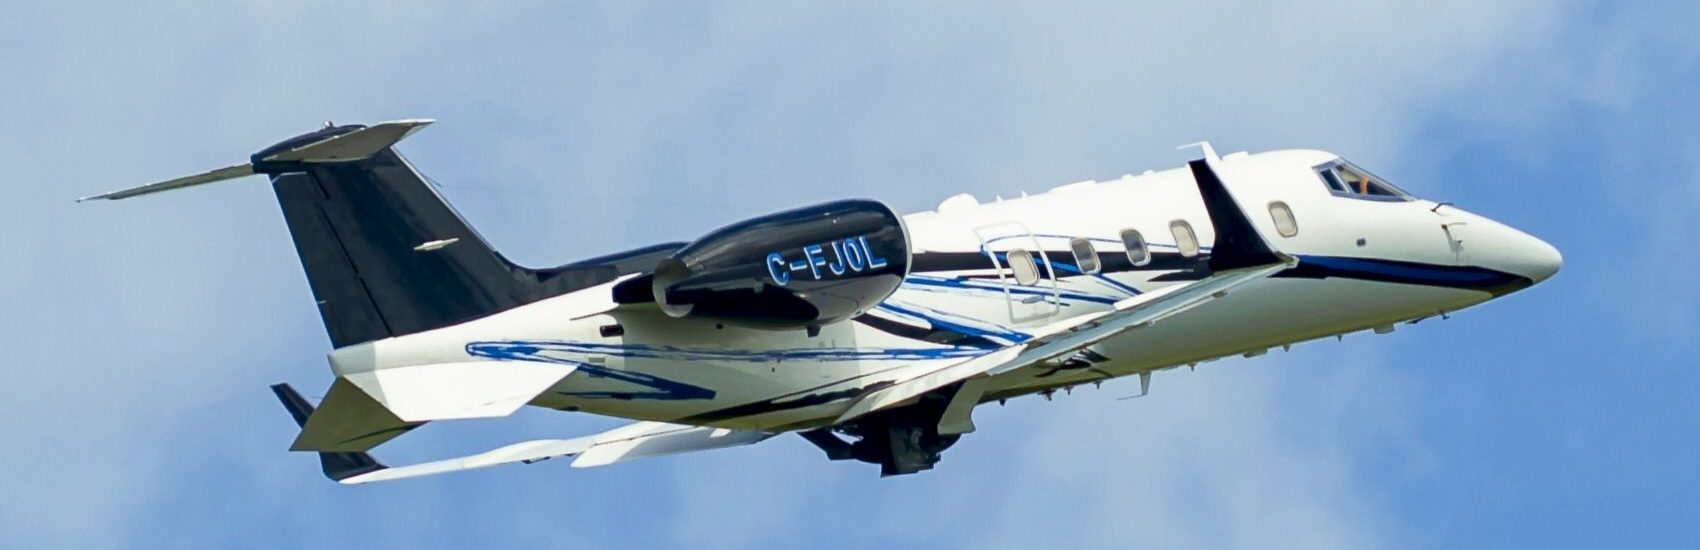 Learjet 60 Aviation Jolina C-FJOL